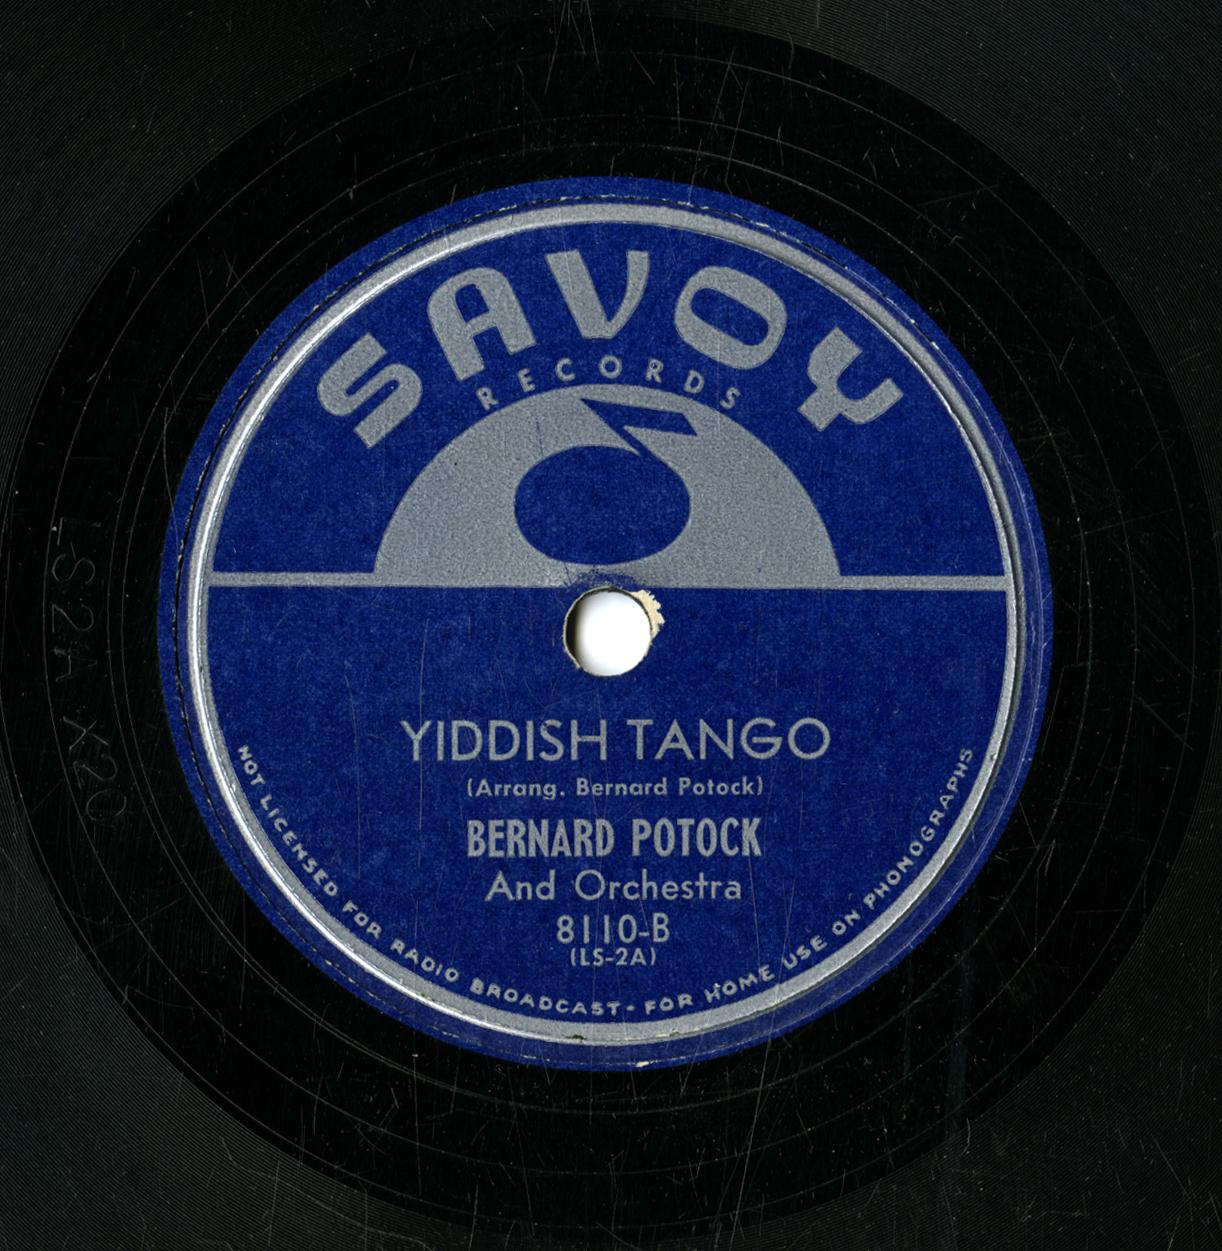 Yiddish tango (1 of 2)